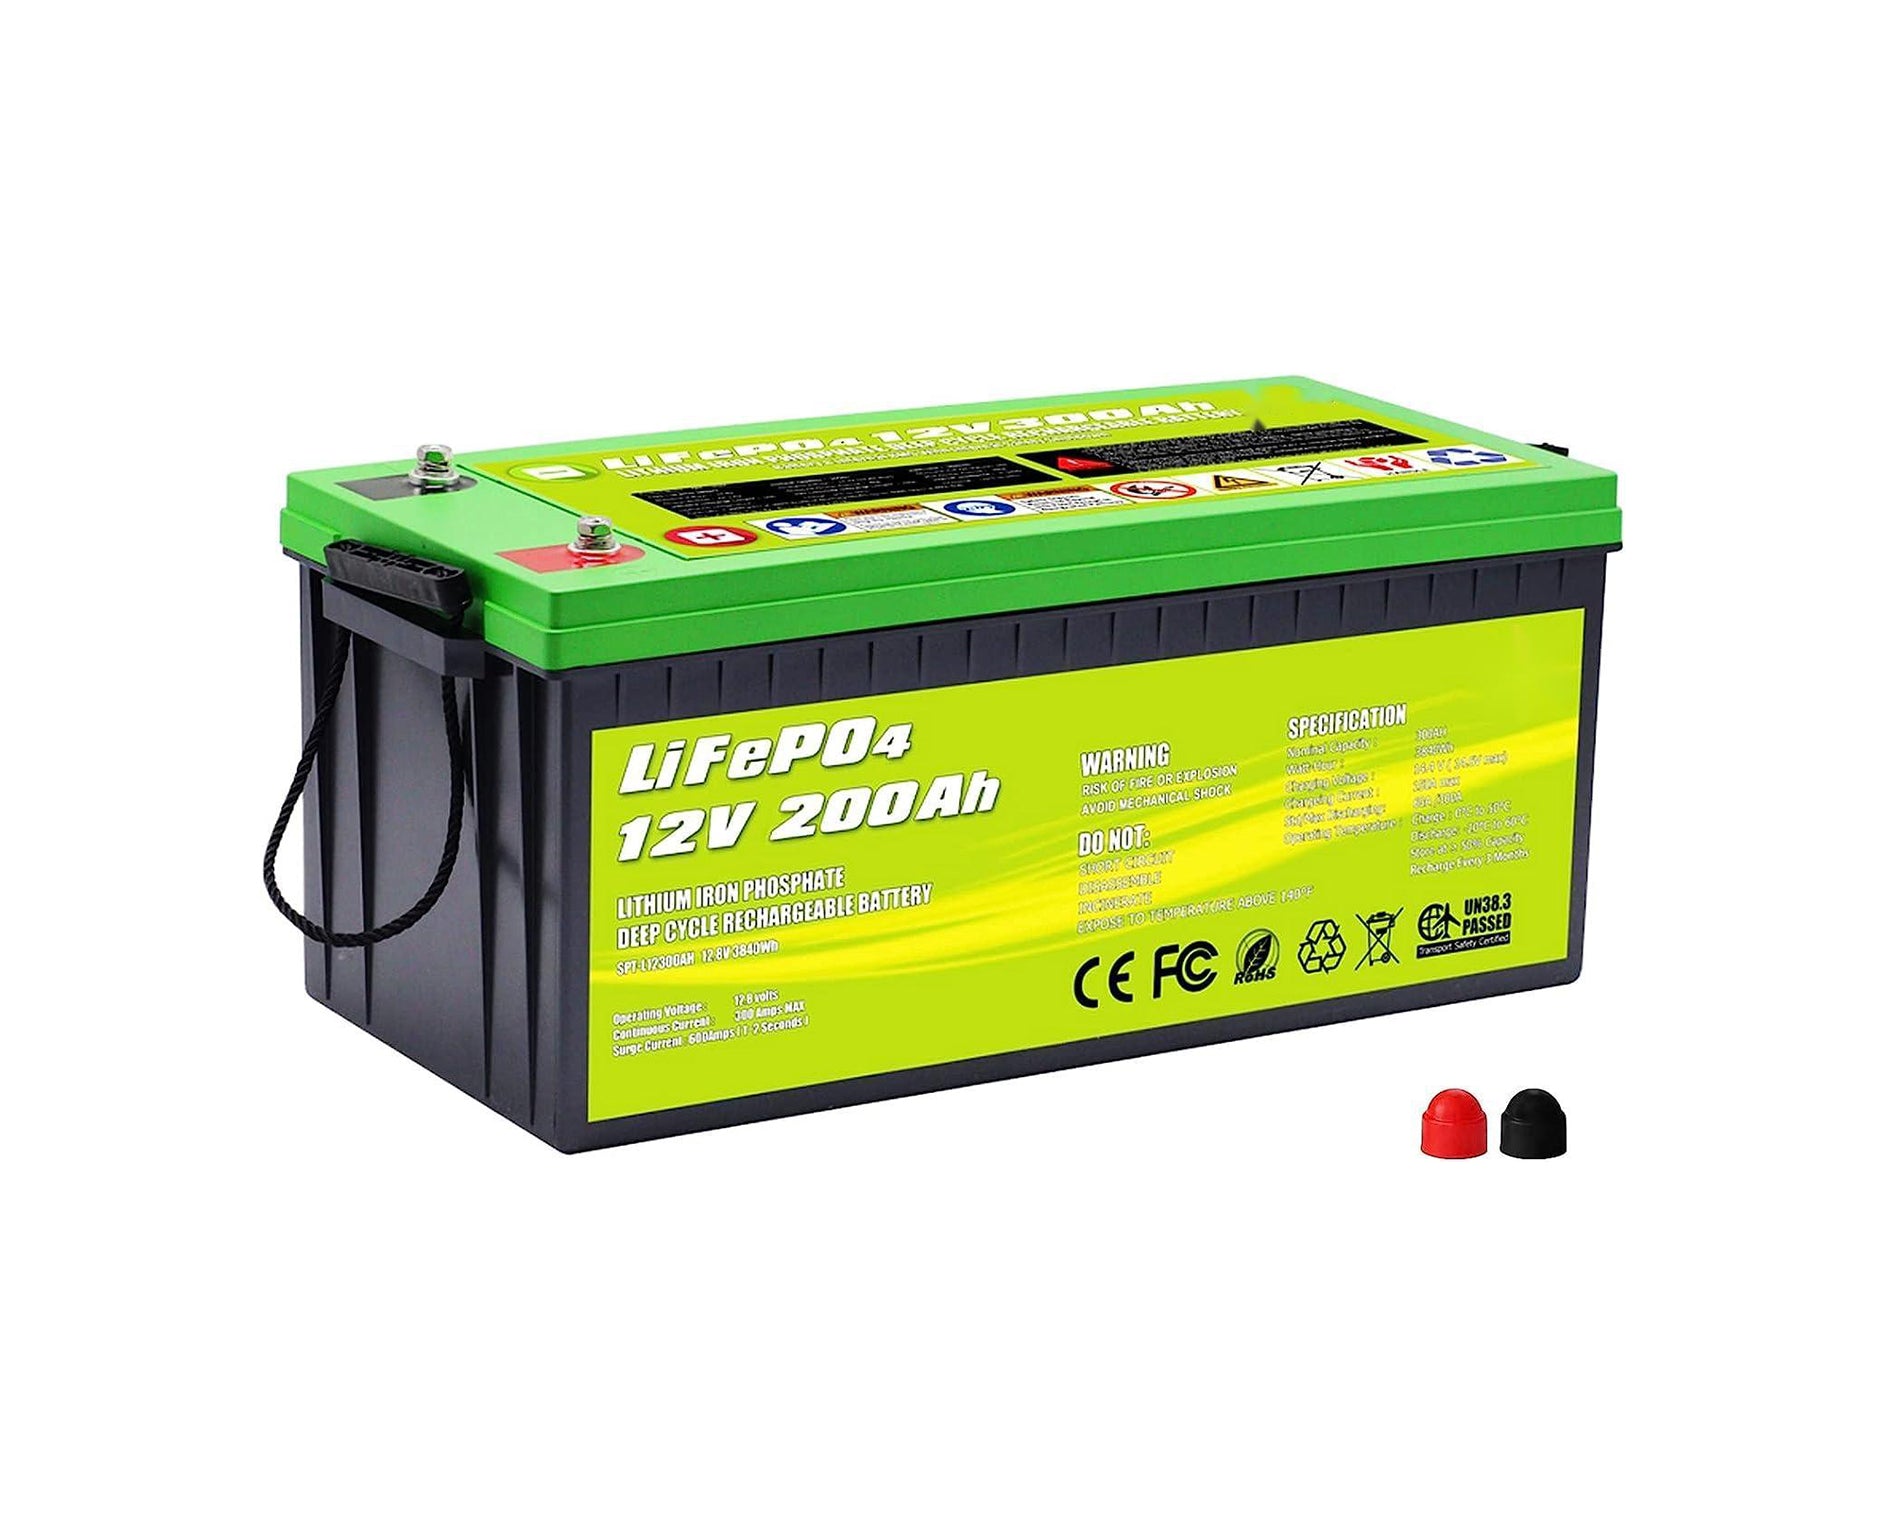 AIMS Power  Lithium Battery 12V 200Ah LiFePO4 Lithium Iron Phosphate –  Solar Sovereign